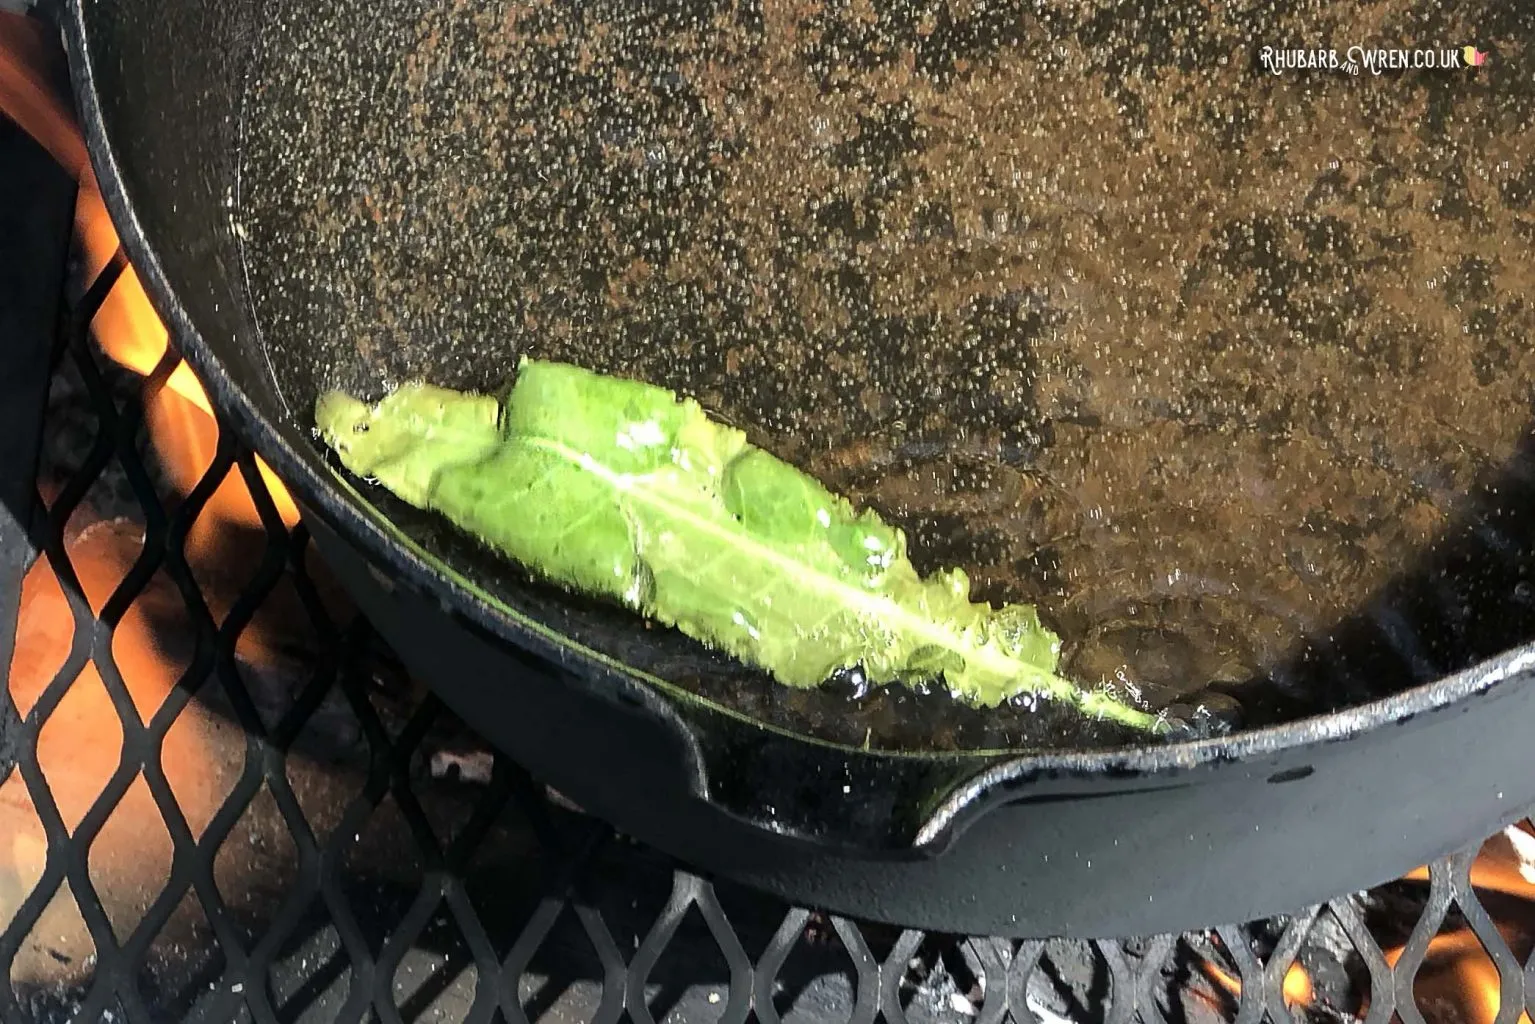 A dandelion leaf frying in oil to make dandelion crisps